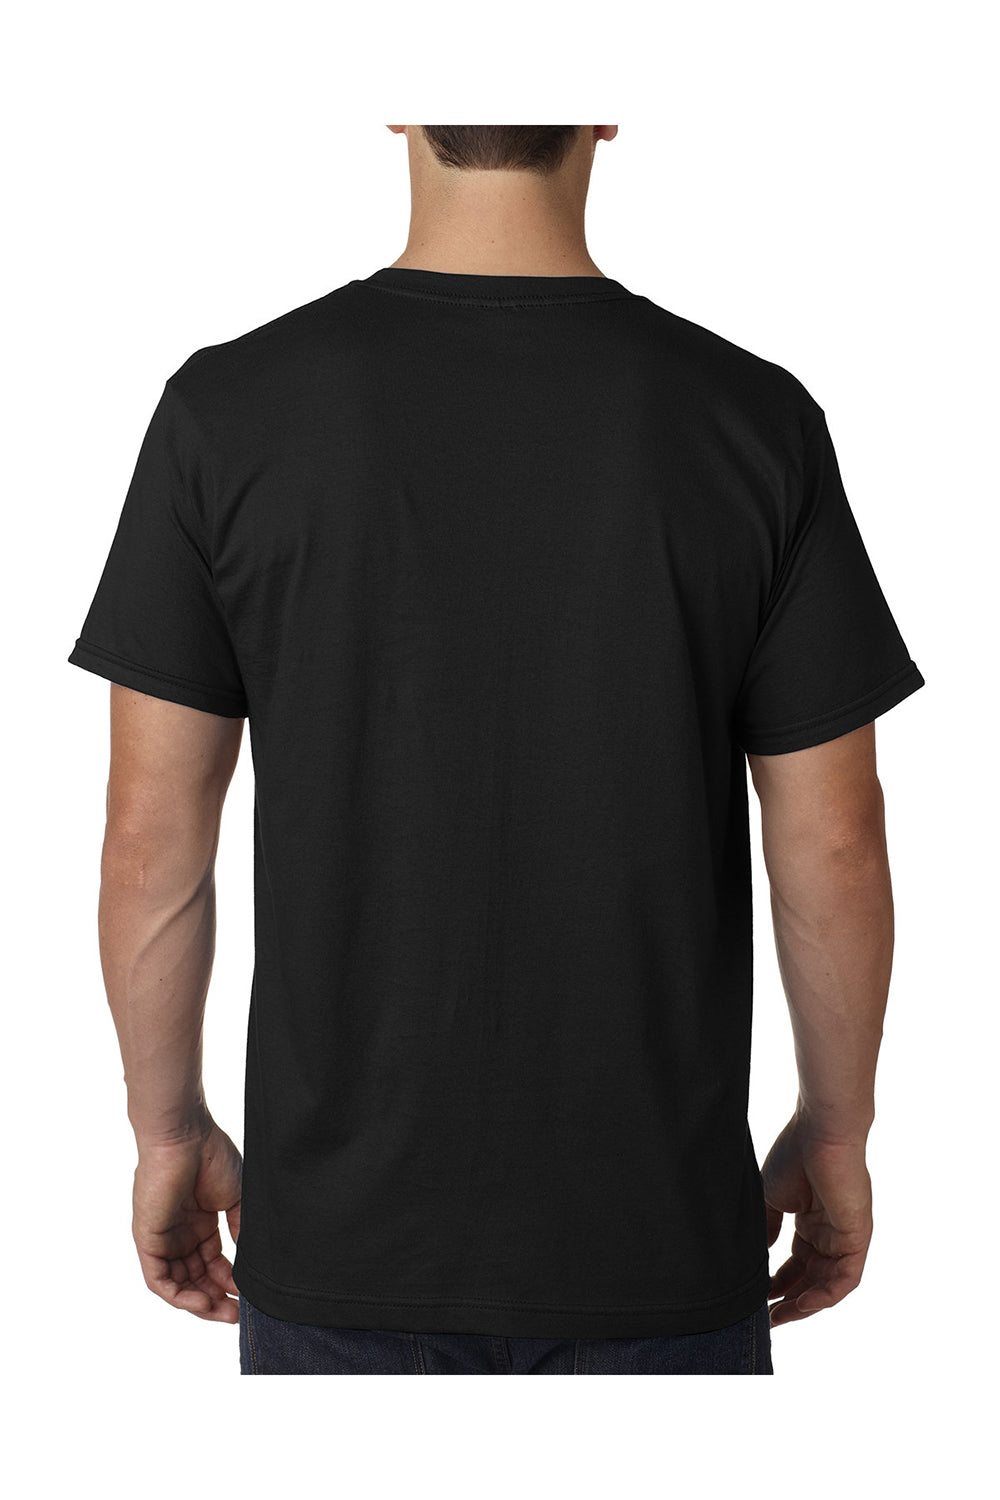 Bayside 5000 Mens USA Made Short Sleeve Crewneck T-Shirt Black Model Back